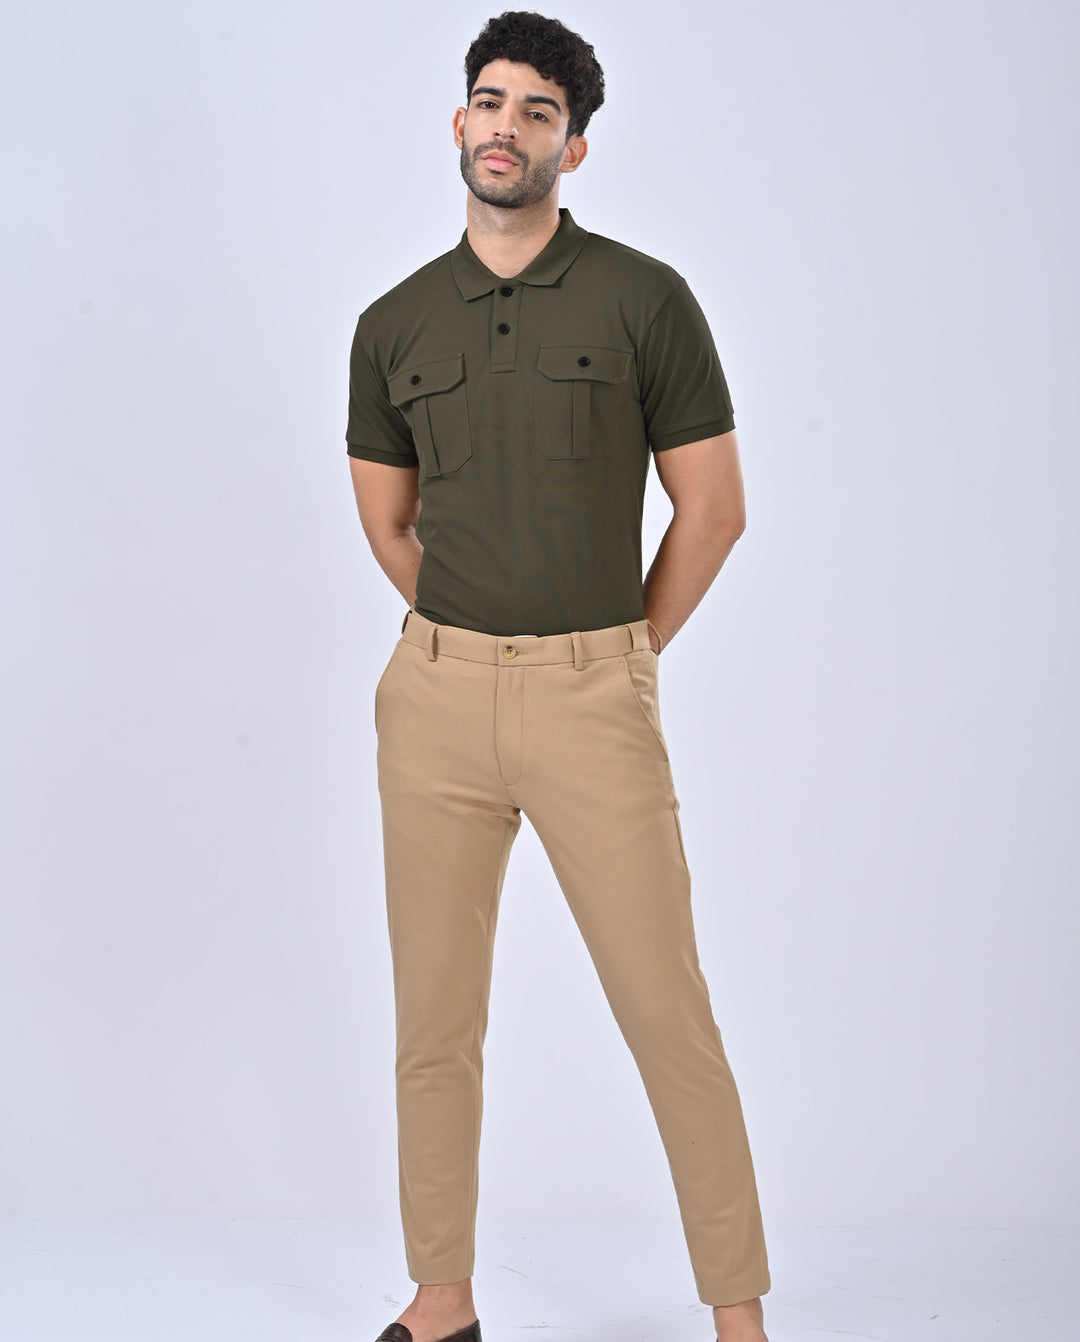 Aero Cargo Olive Green Polo T-Shirt